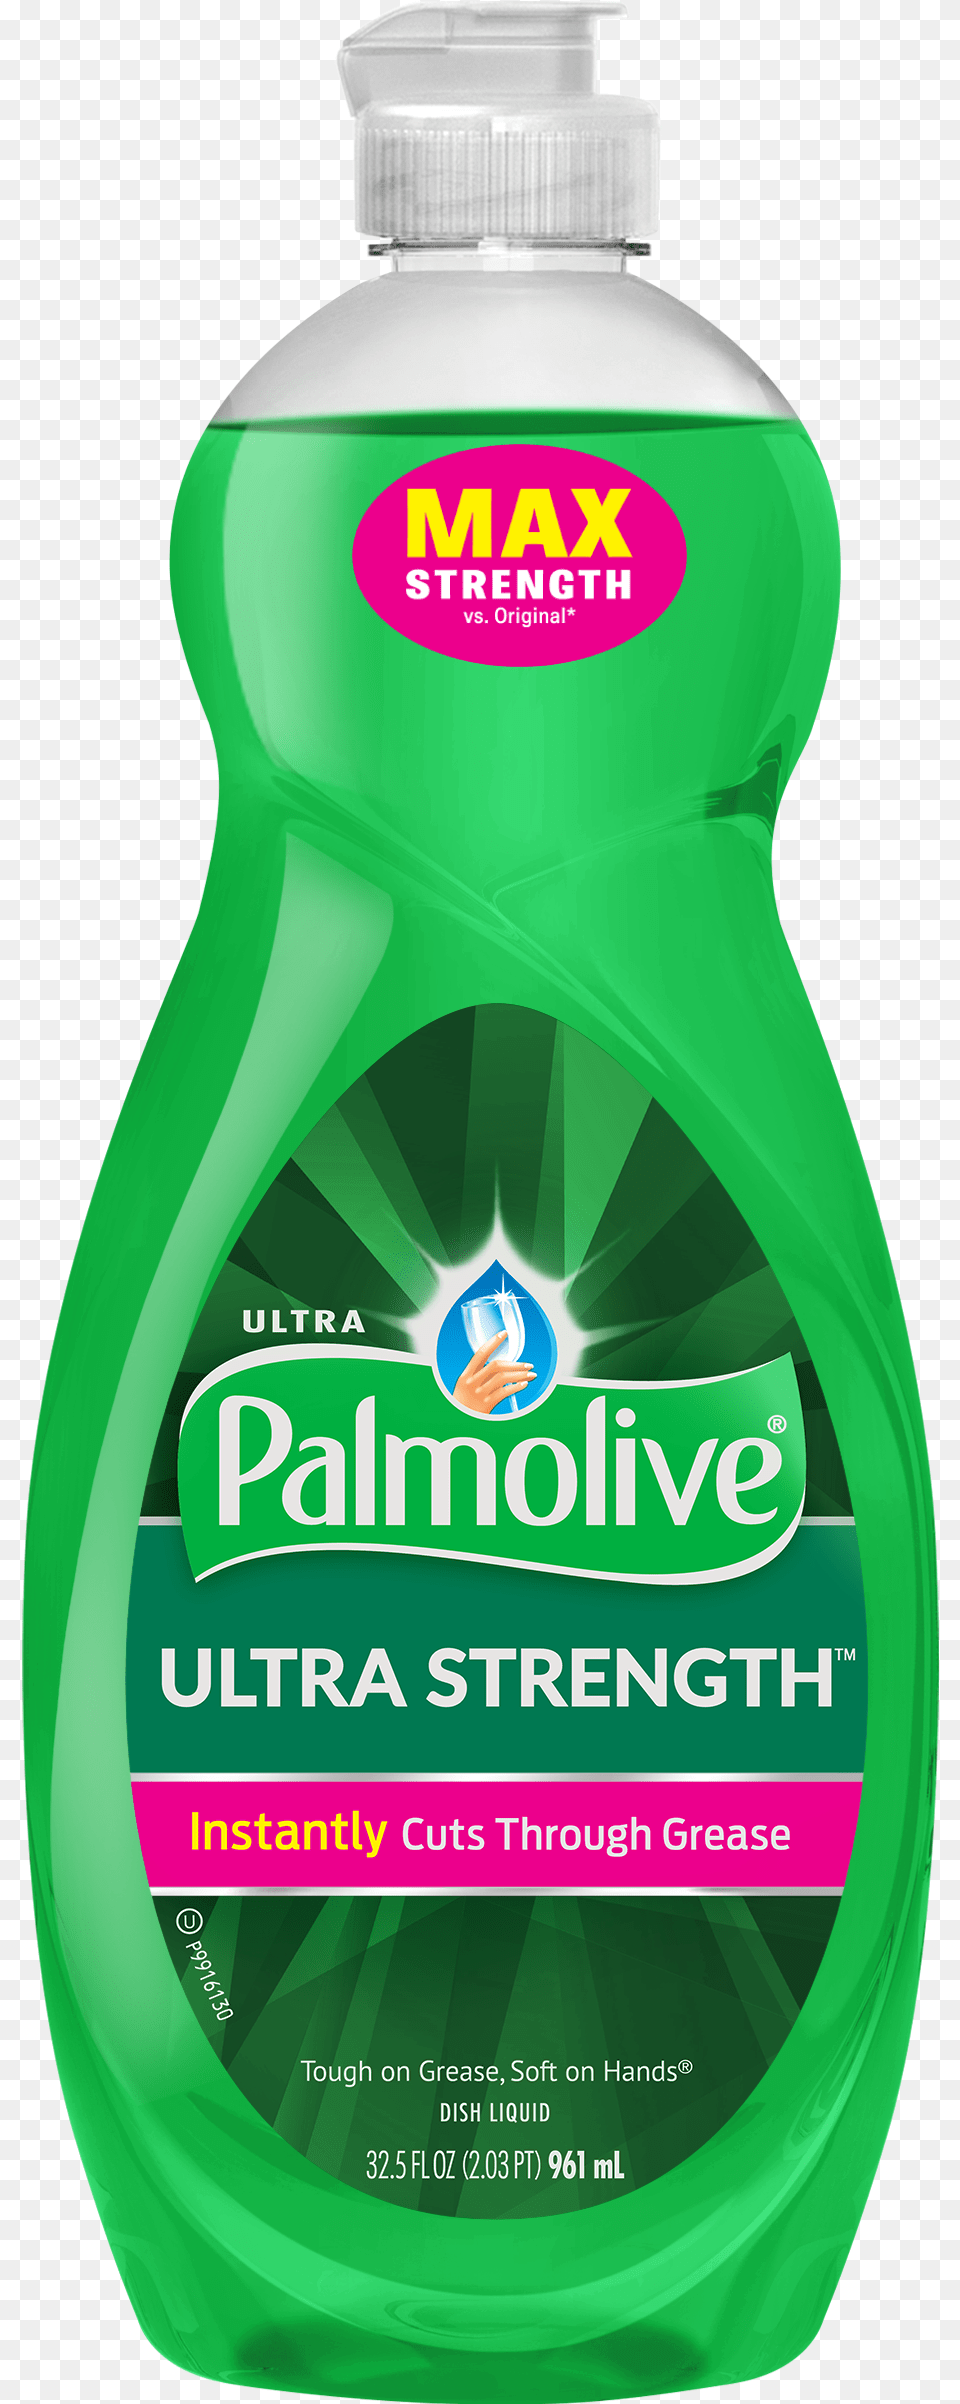 Palmolive Ultra Strength, Bottle, Food, Ketchup Free Png Download